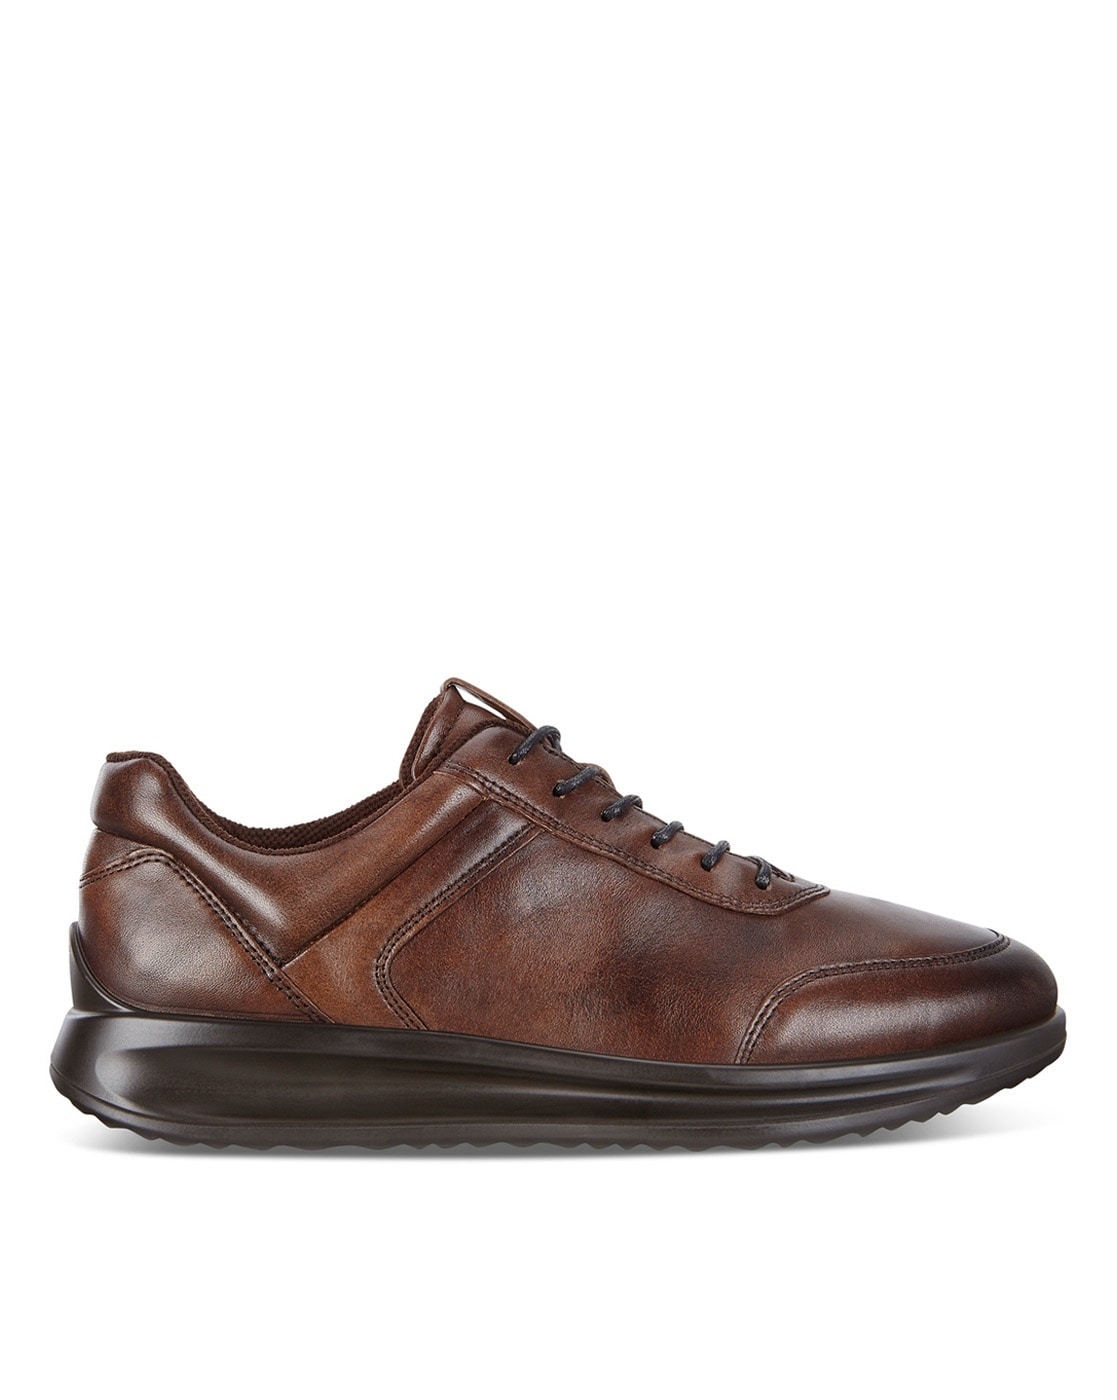 Buy ECCO Mens Brown Aquet Formal Shoes  UK  65 at Amazonin